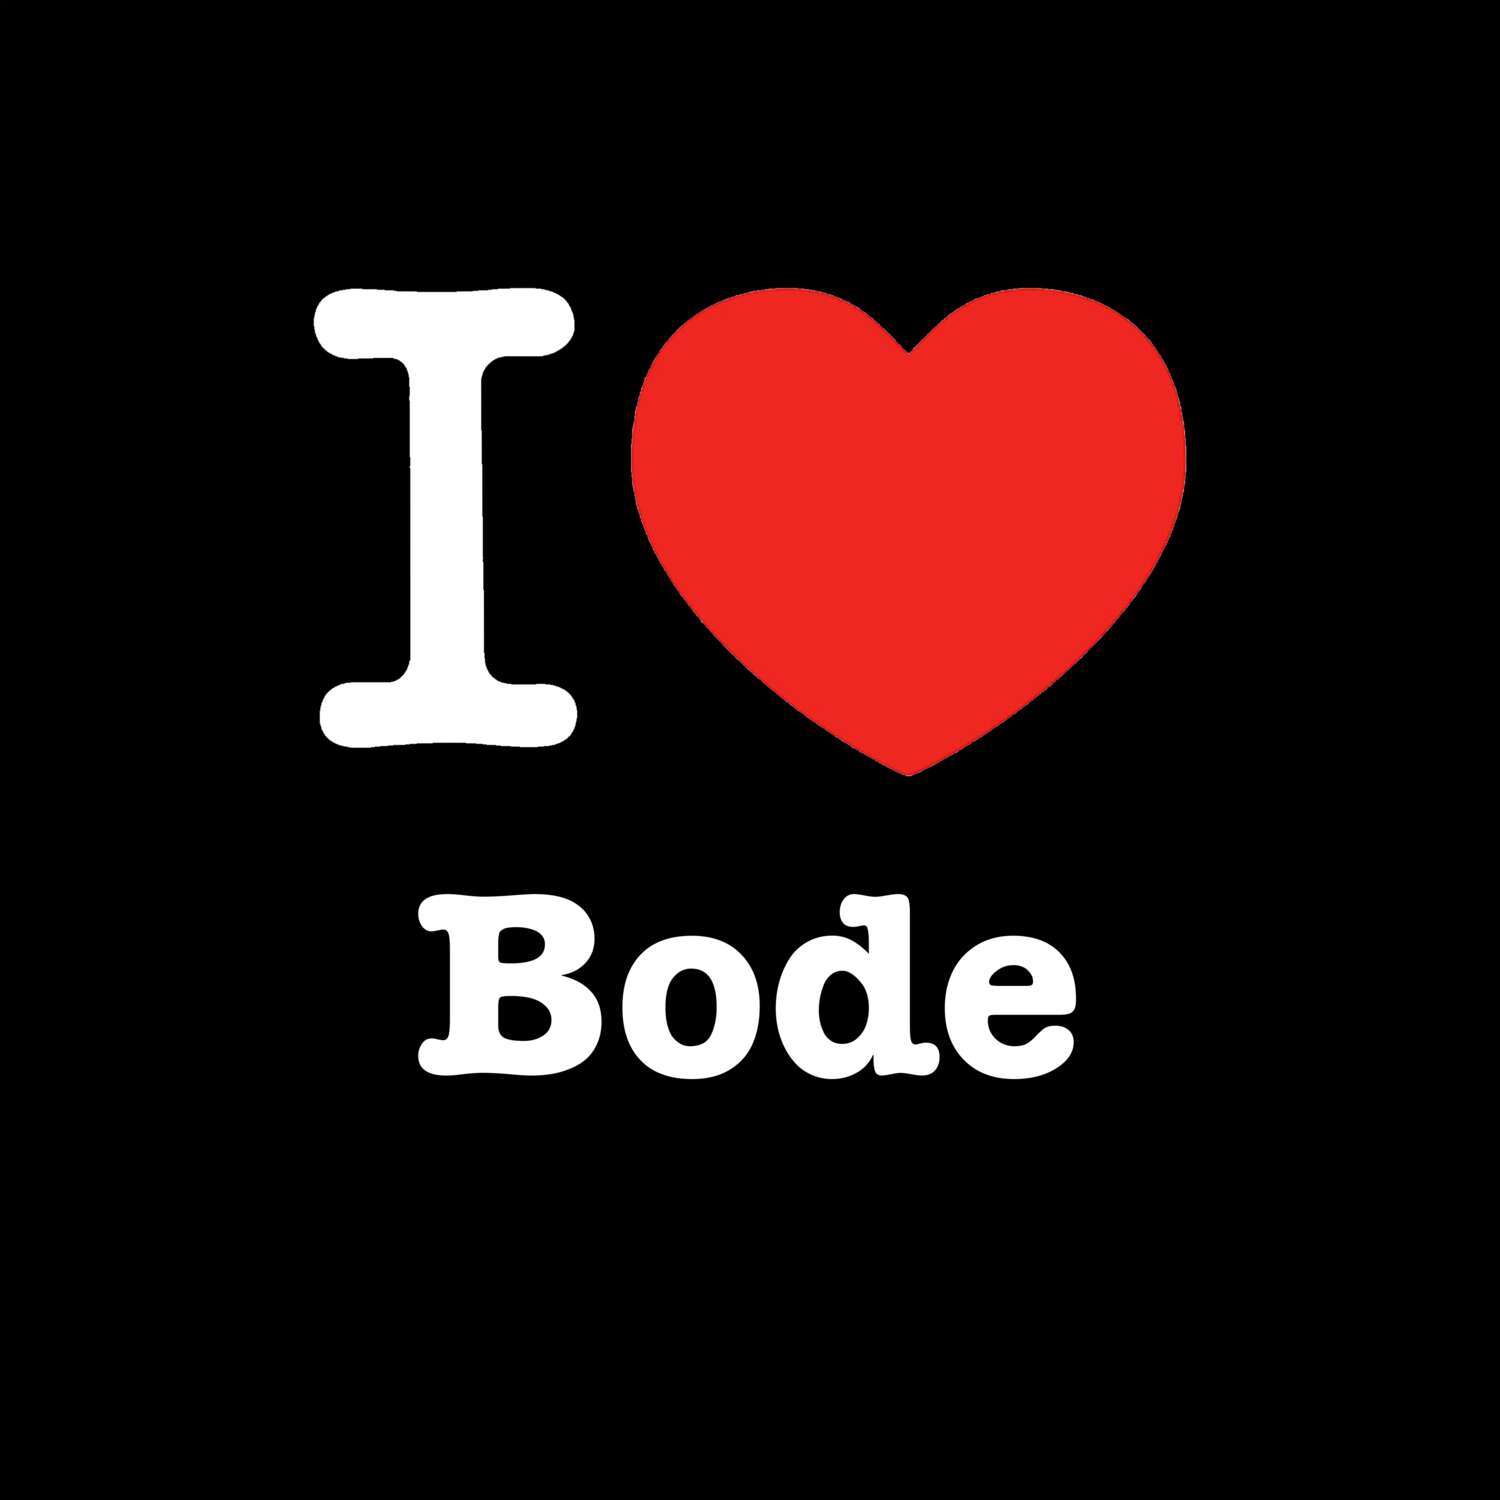 Bode T-Shirt »I love«